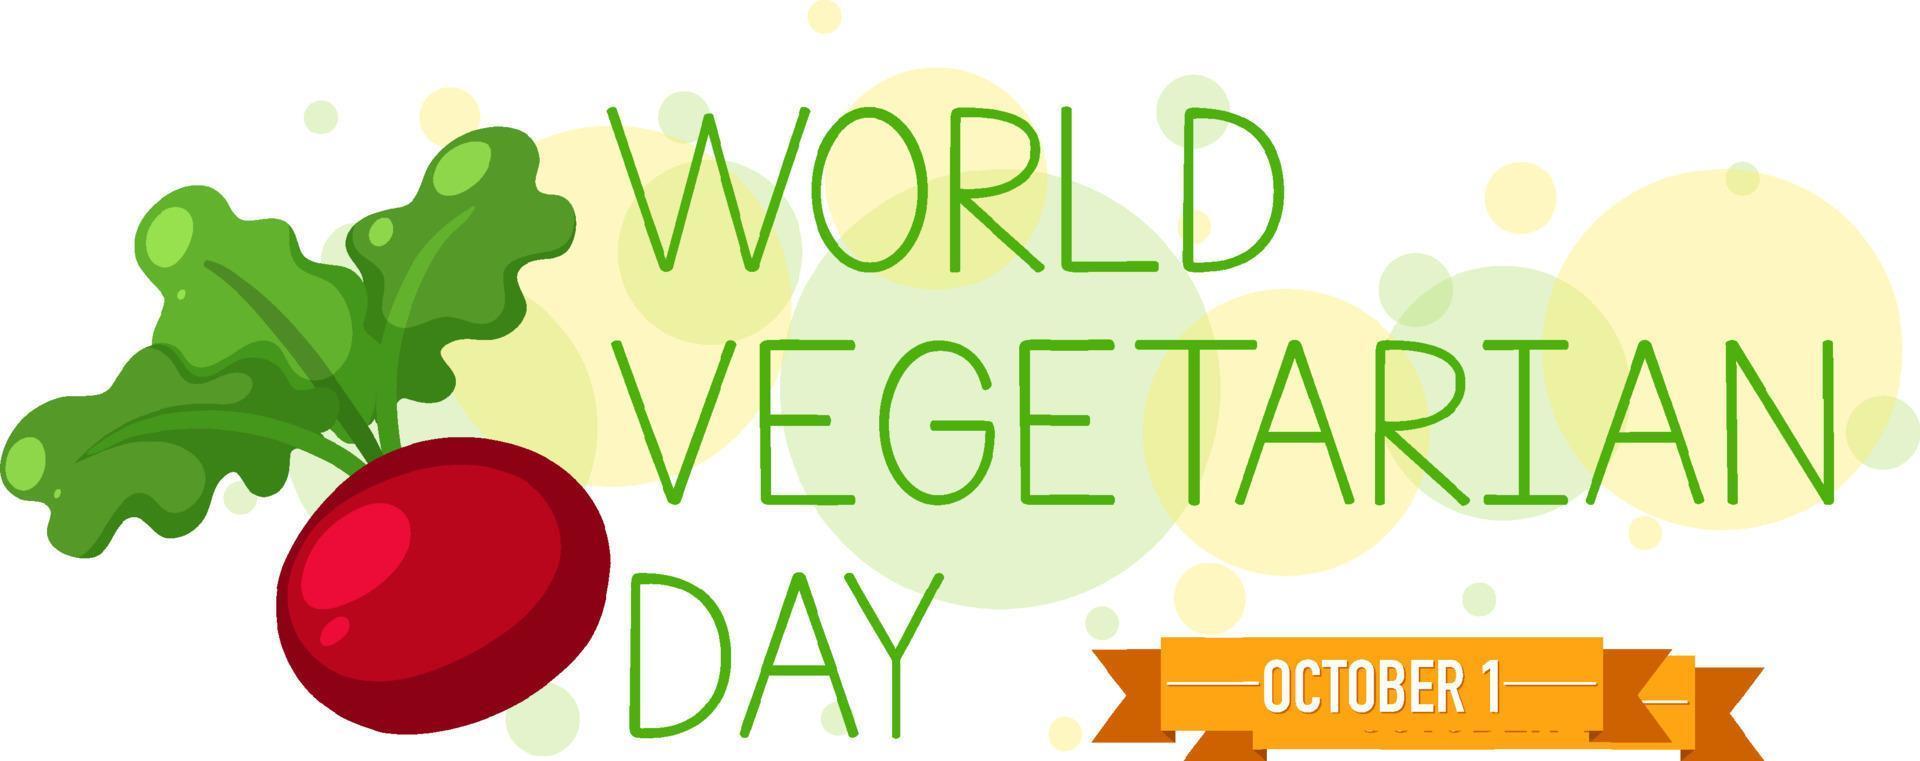 World Vegetarian Day logo with a radish vector